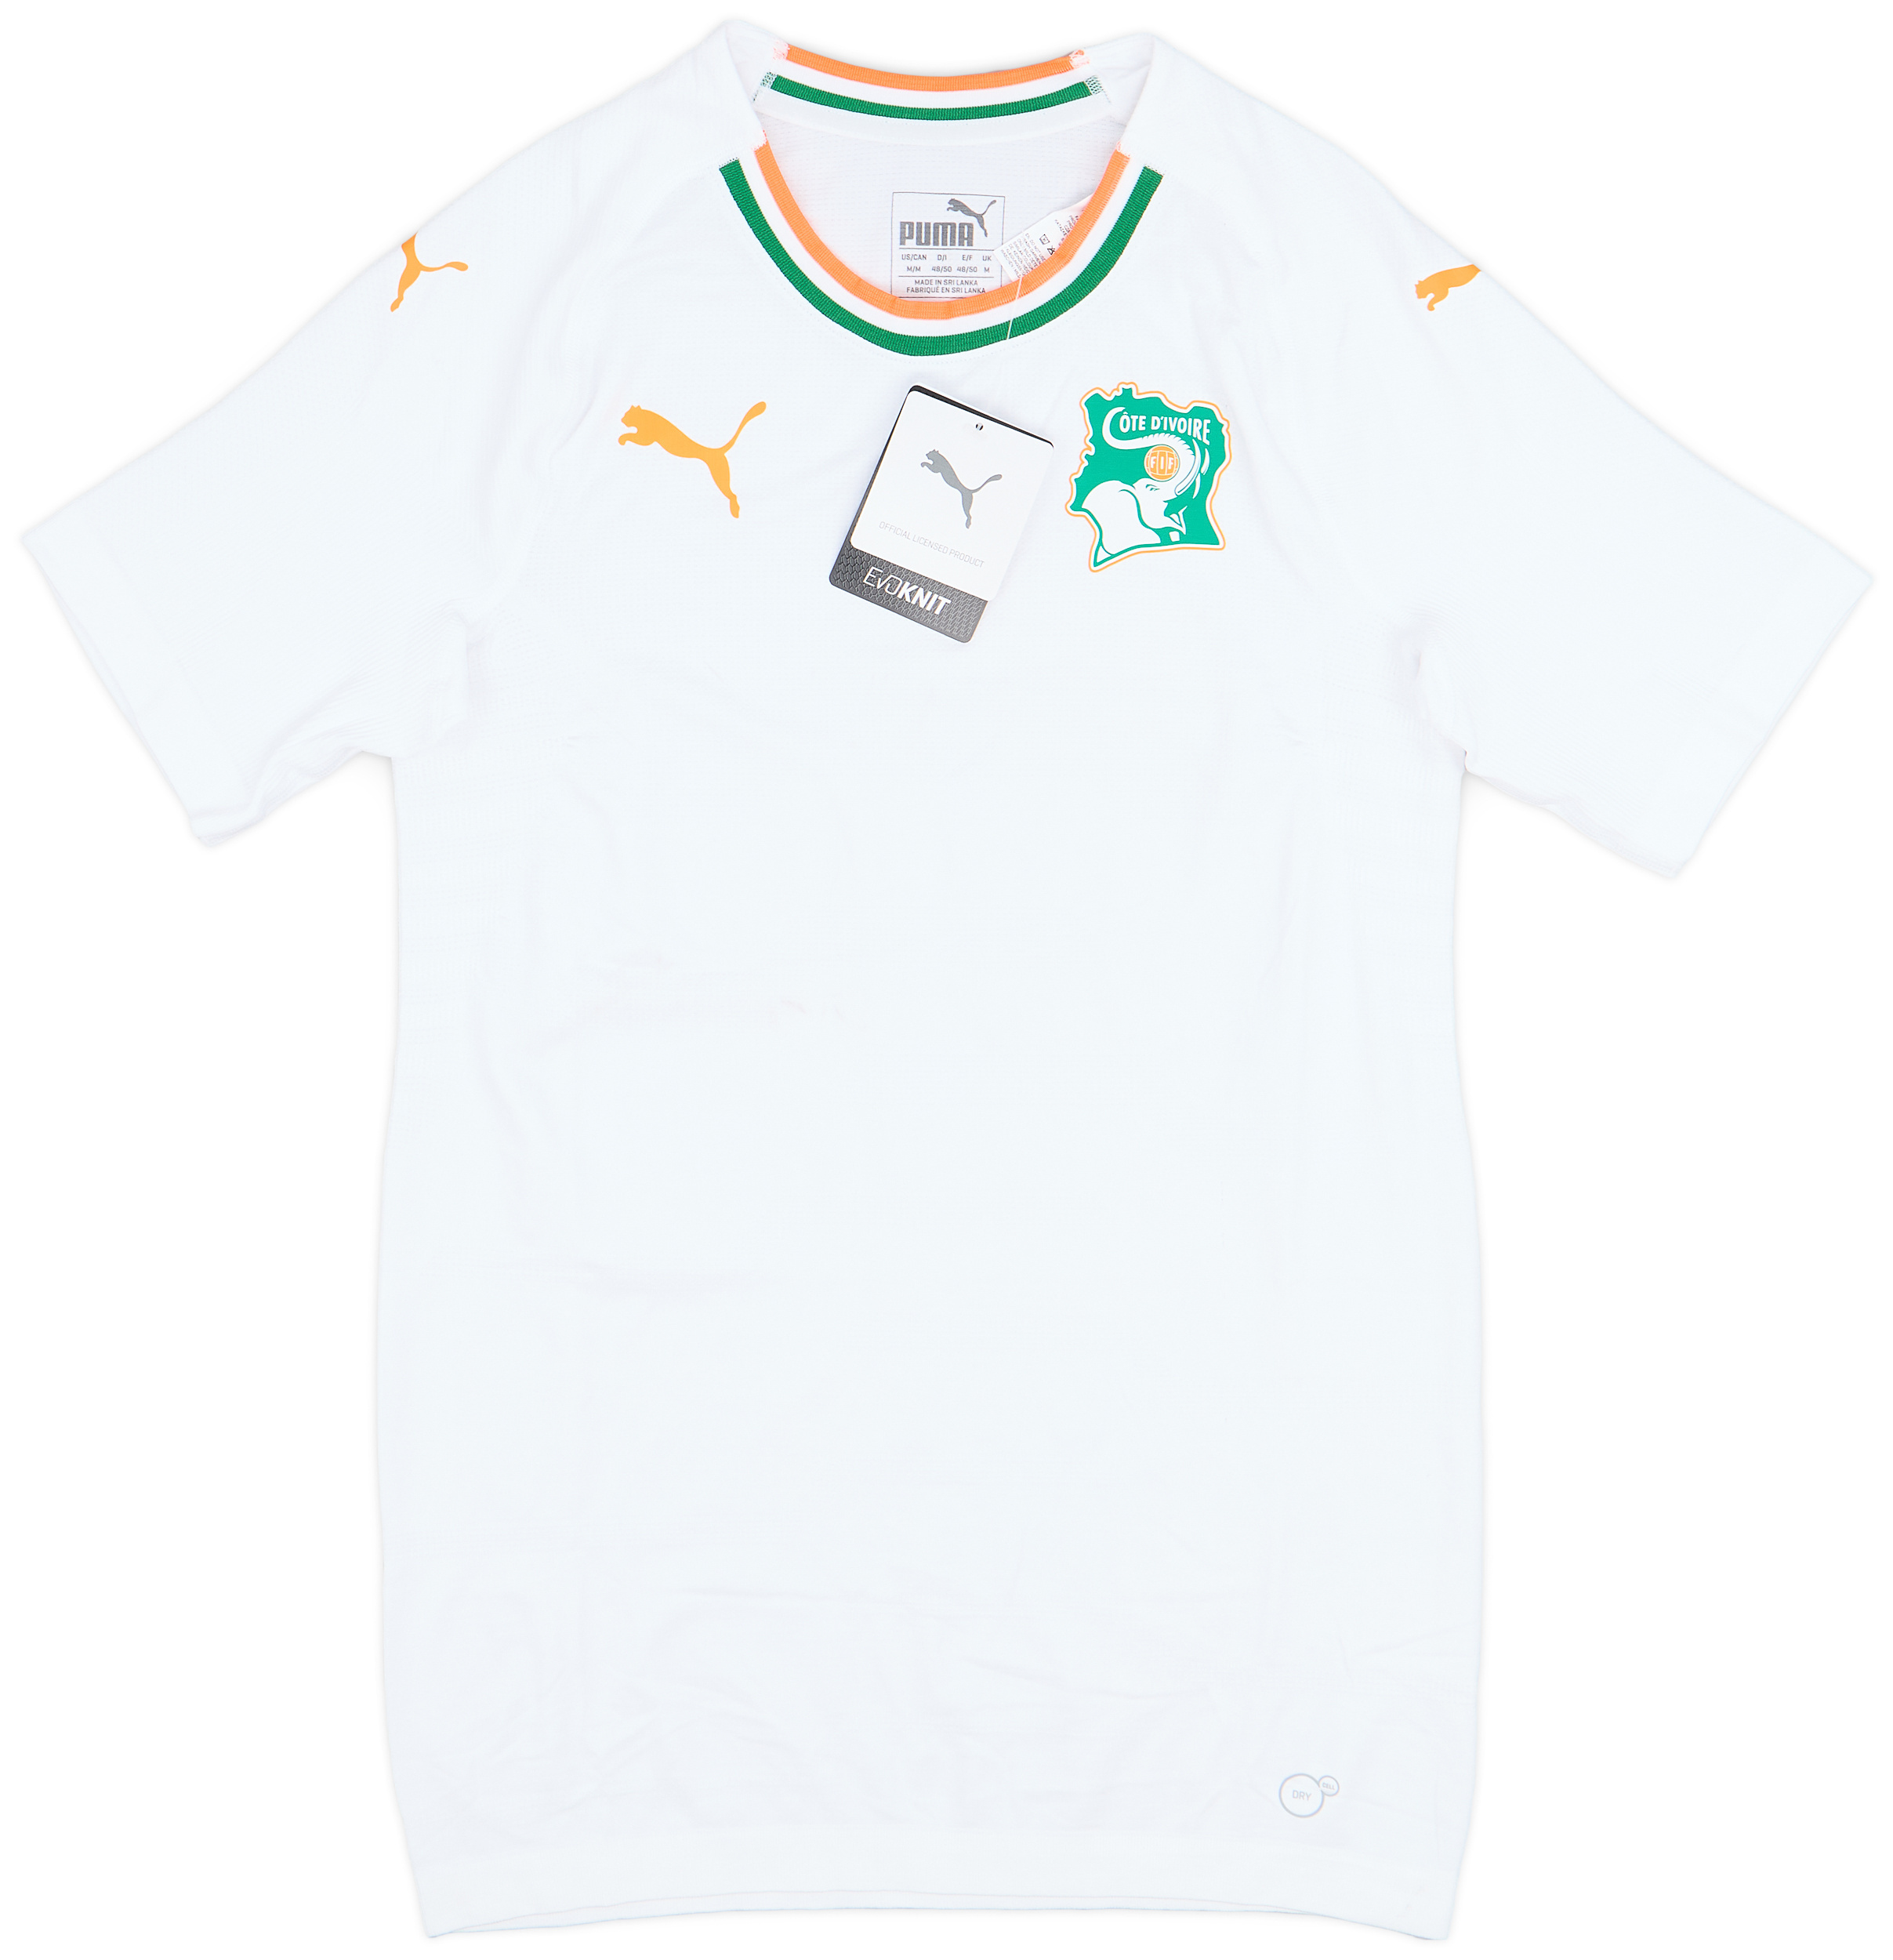 2018-19 Ivory Coast EvoKnit Player Issue Away Shirt ()